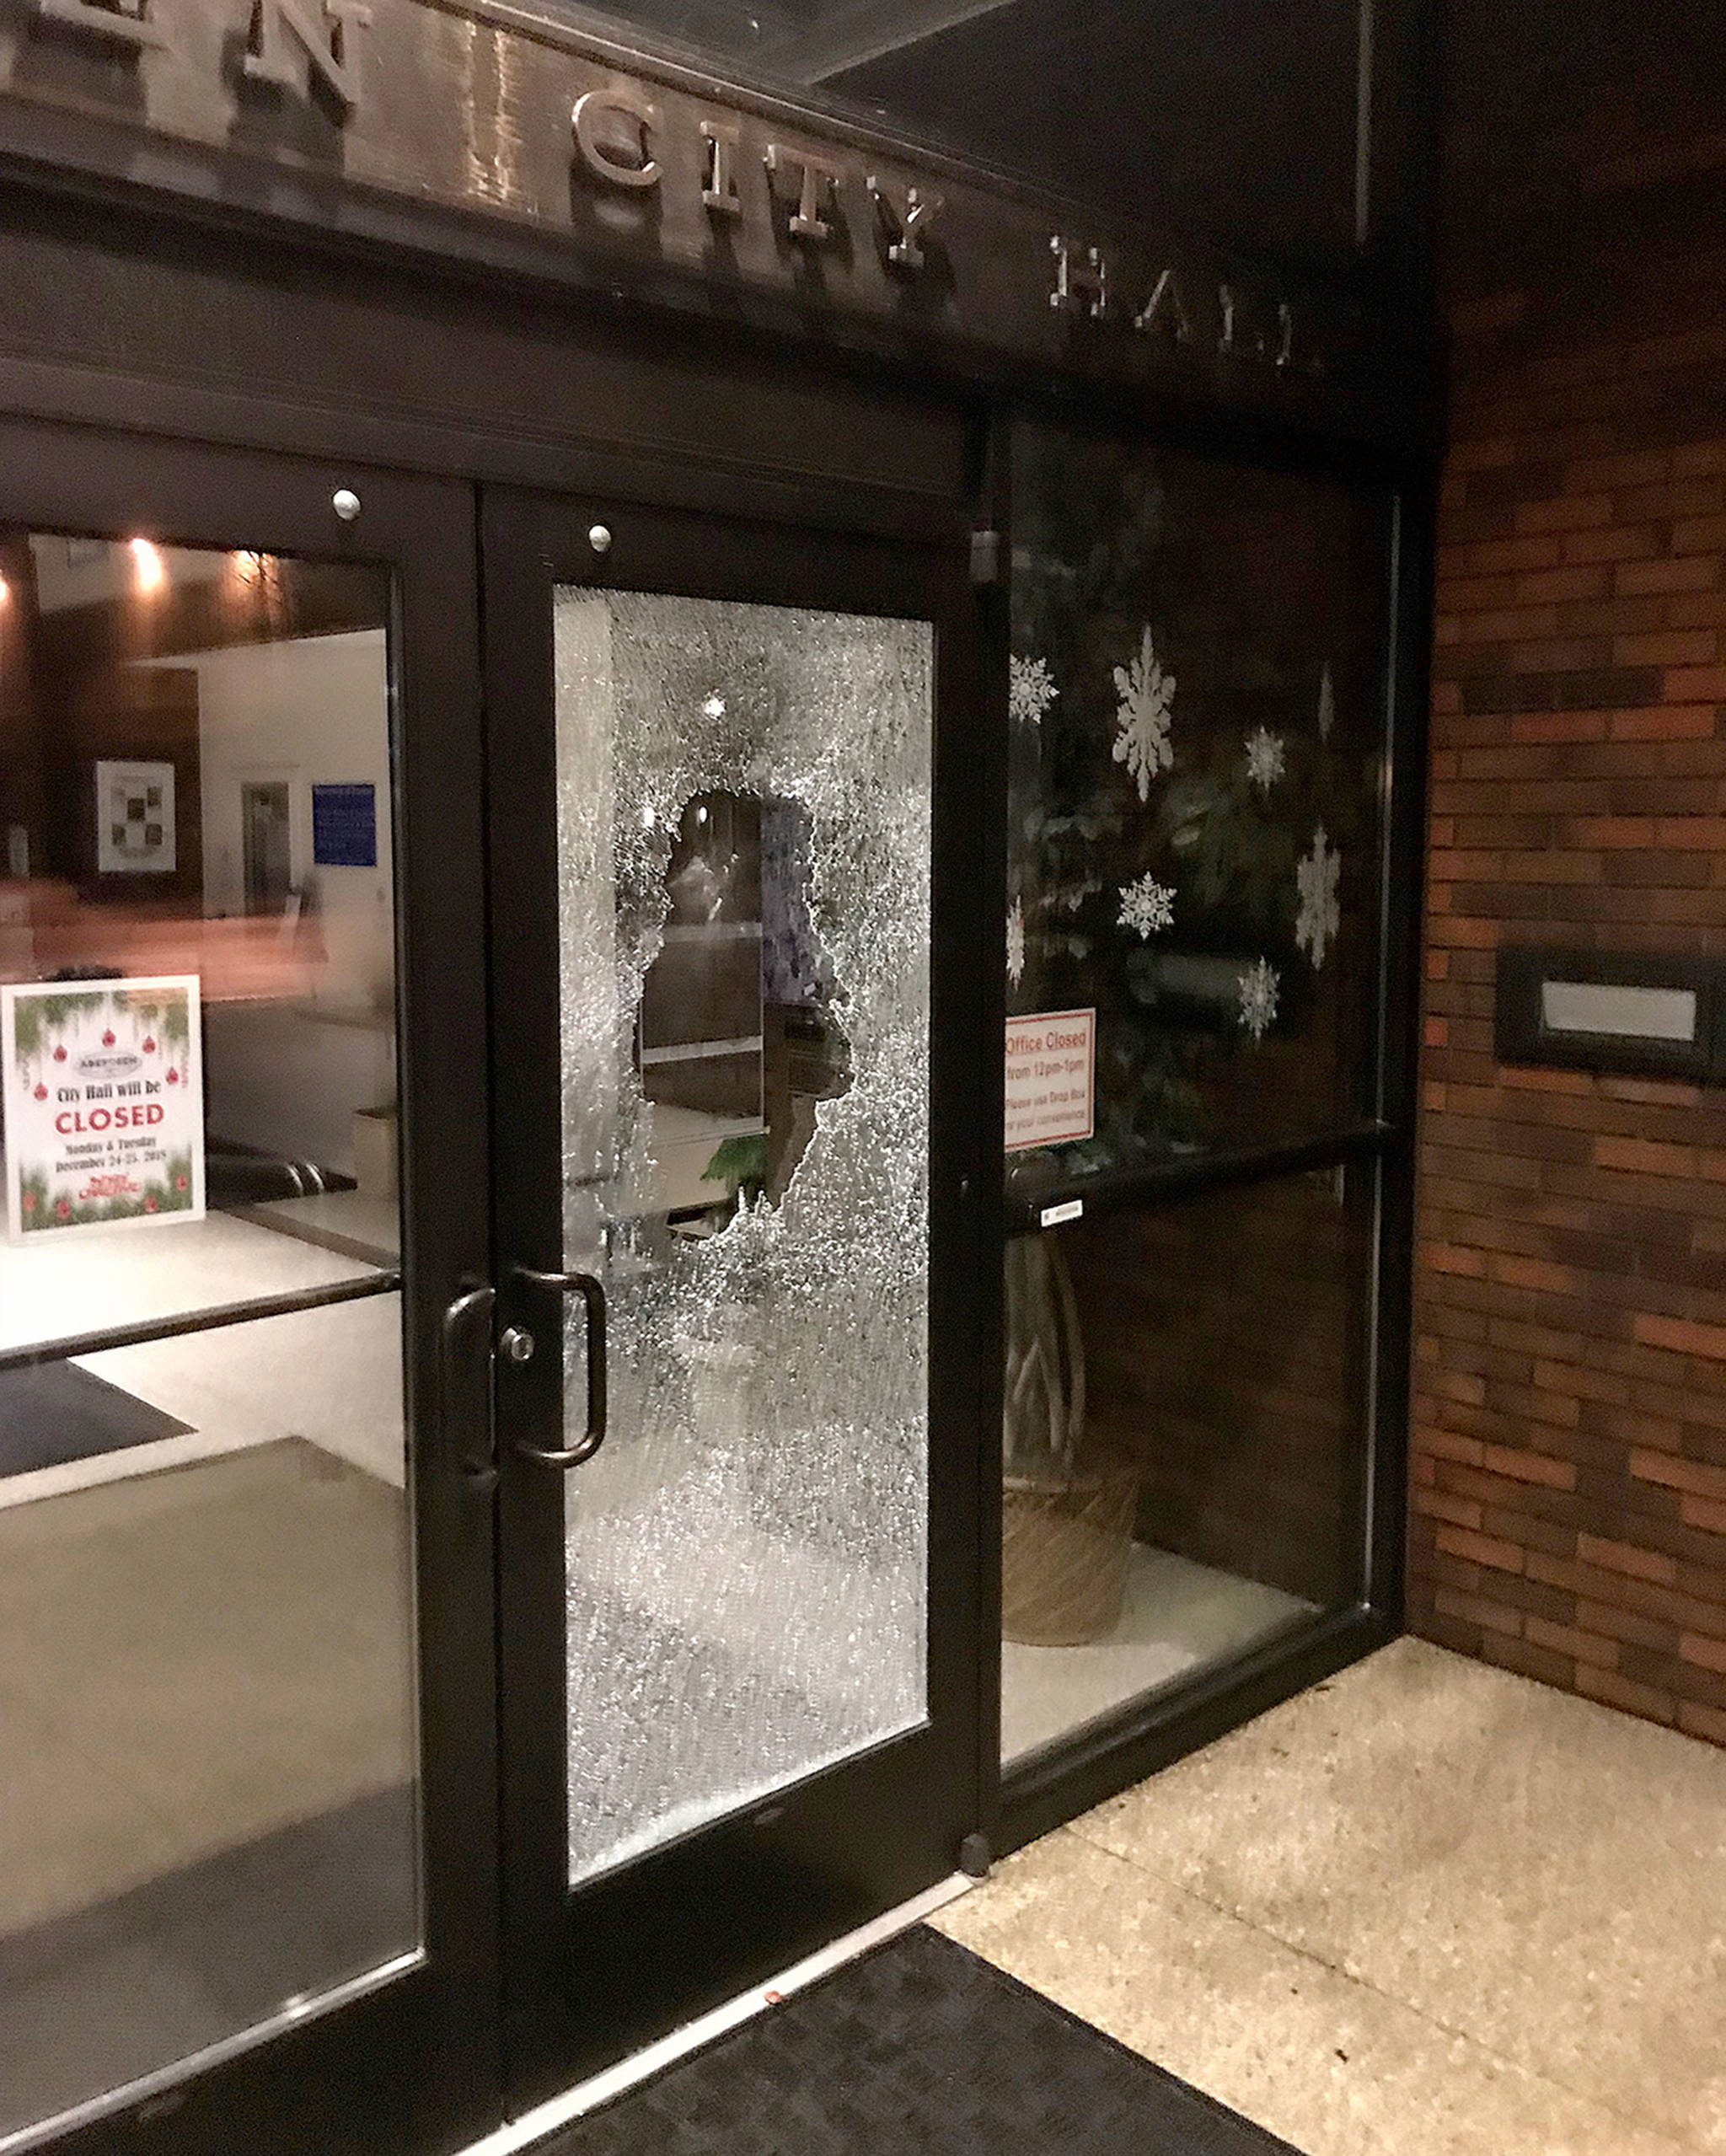 (Louis Krauss | Grays Harbor News Group) A man broke the glass door on the Market Street entrance to Aberdeen City hall around 10:30 p.m. Saturday.